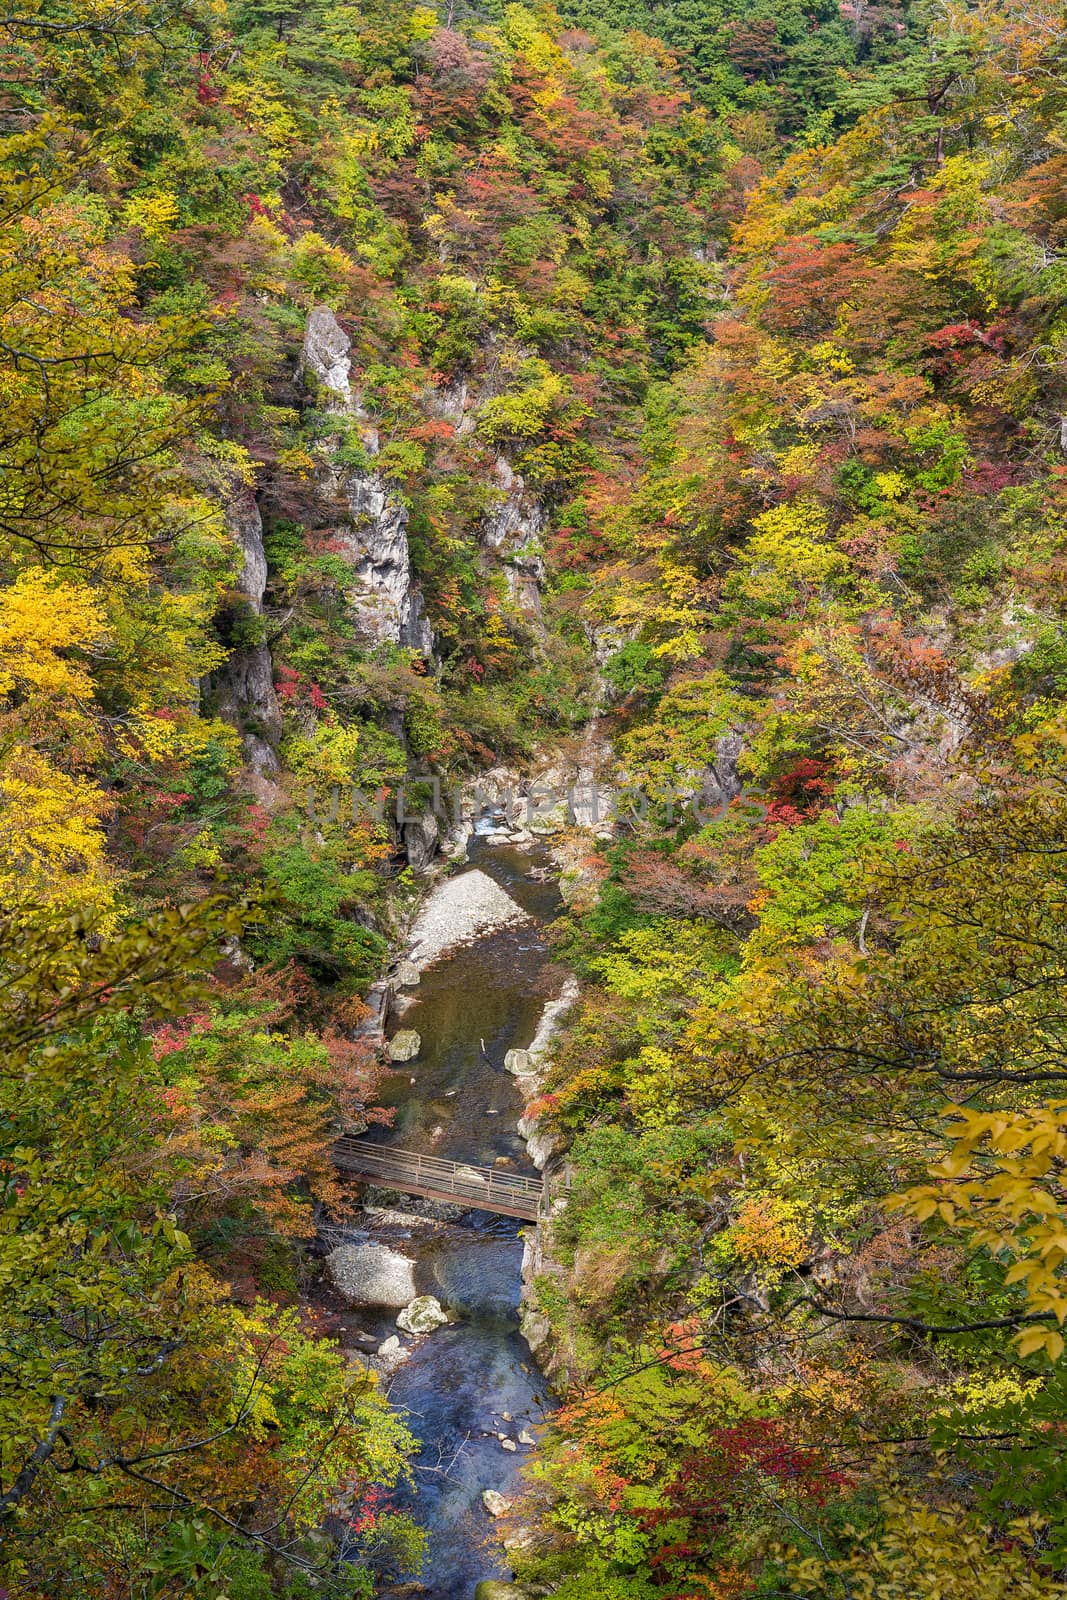 Naruko canyon with autumn foliage in Japan by leungchopan